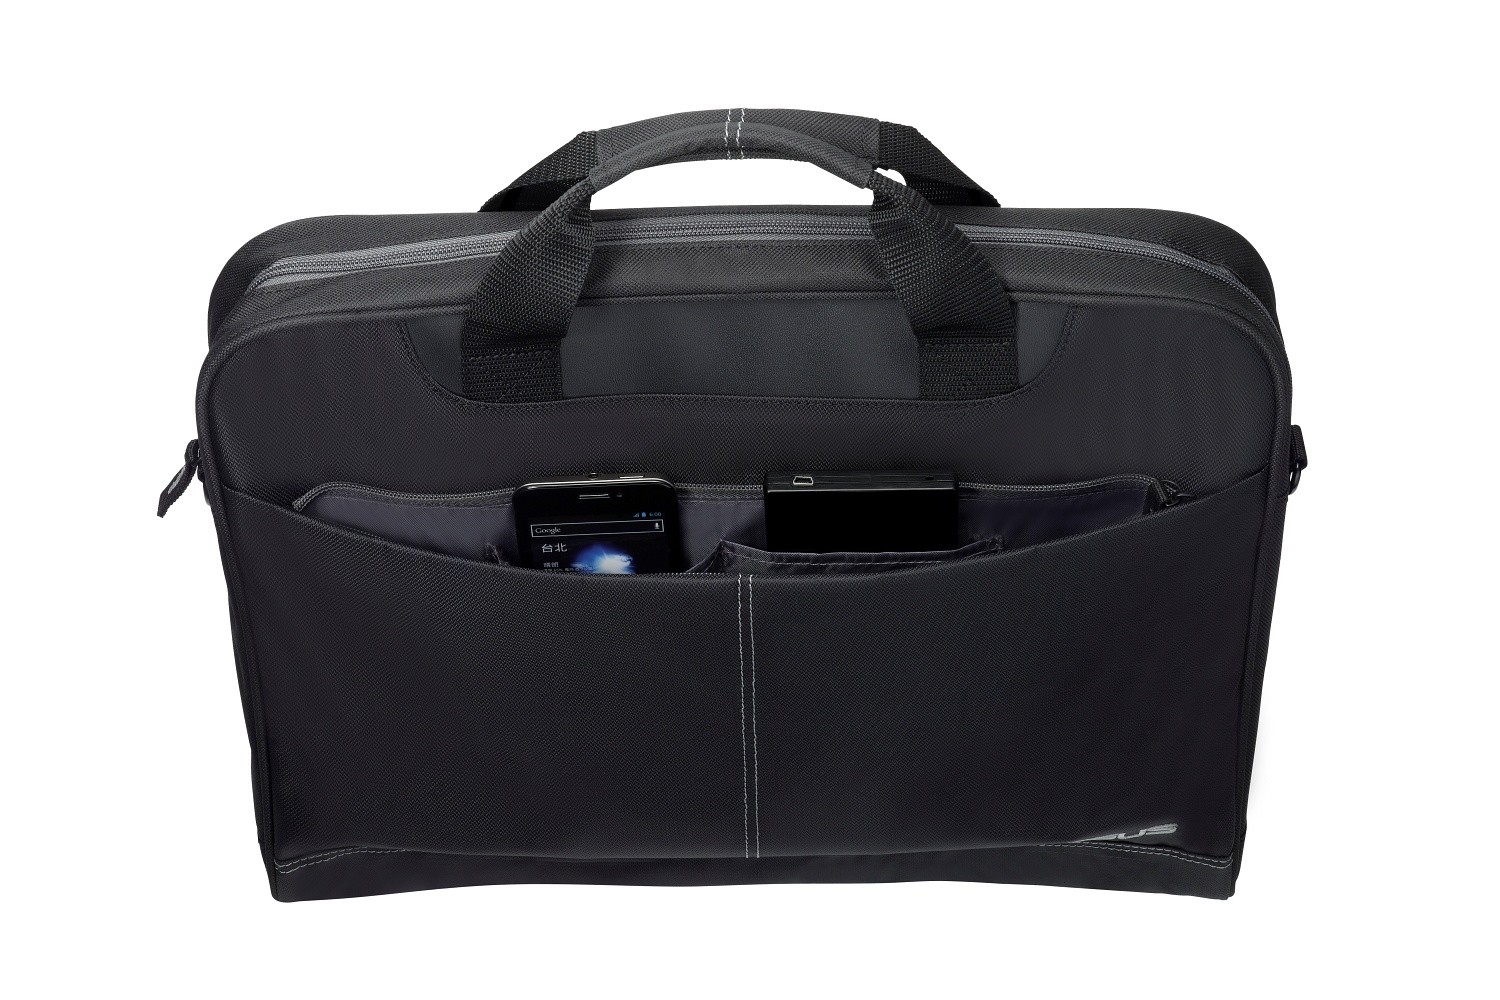 Geanta de laptop ASUS Nereus Carry Bag